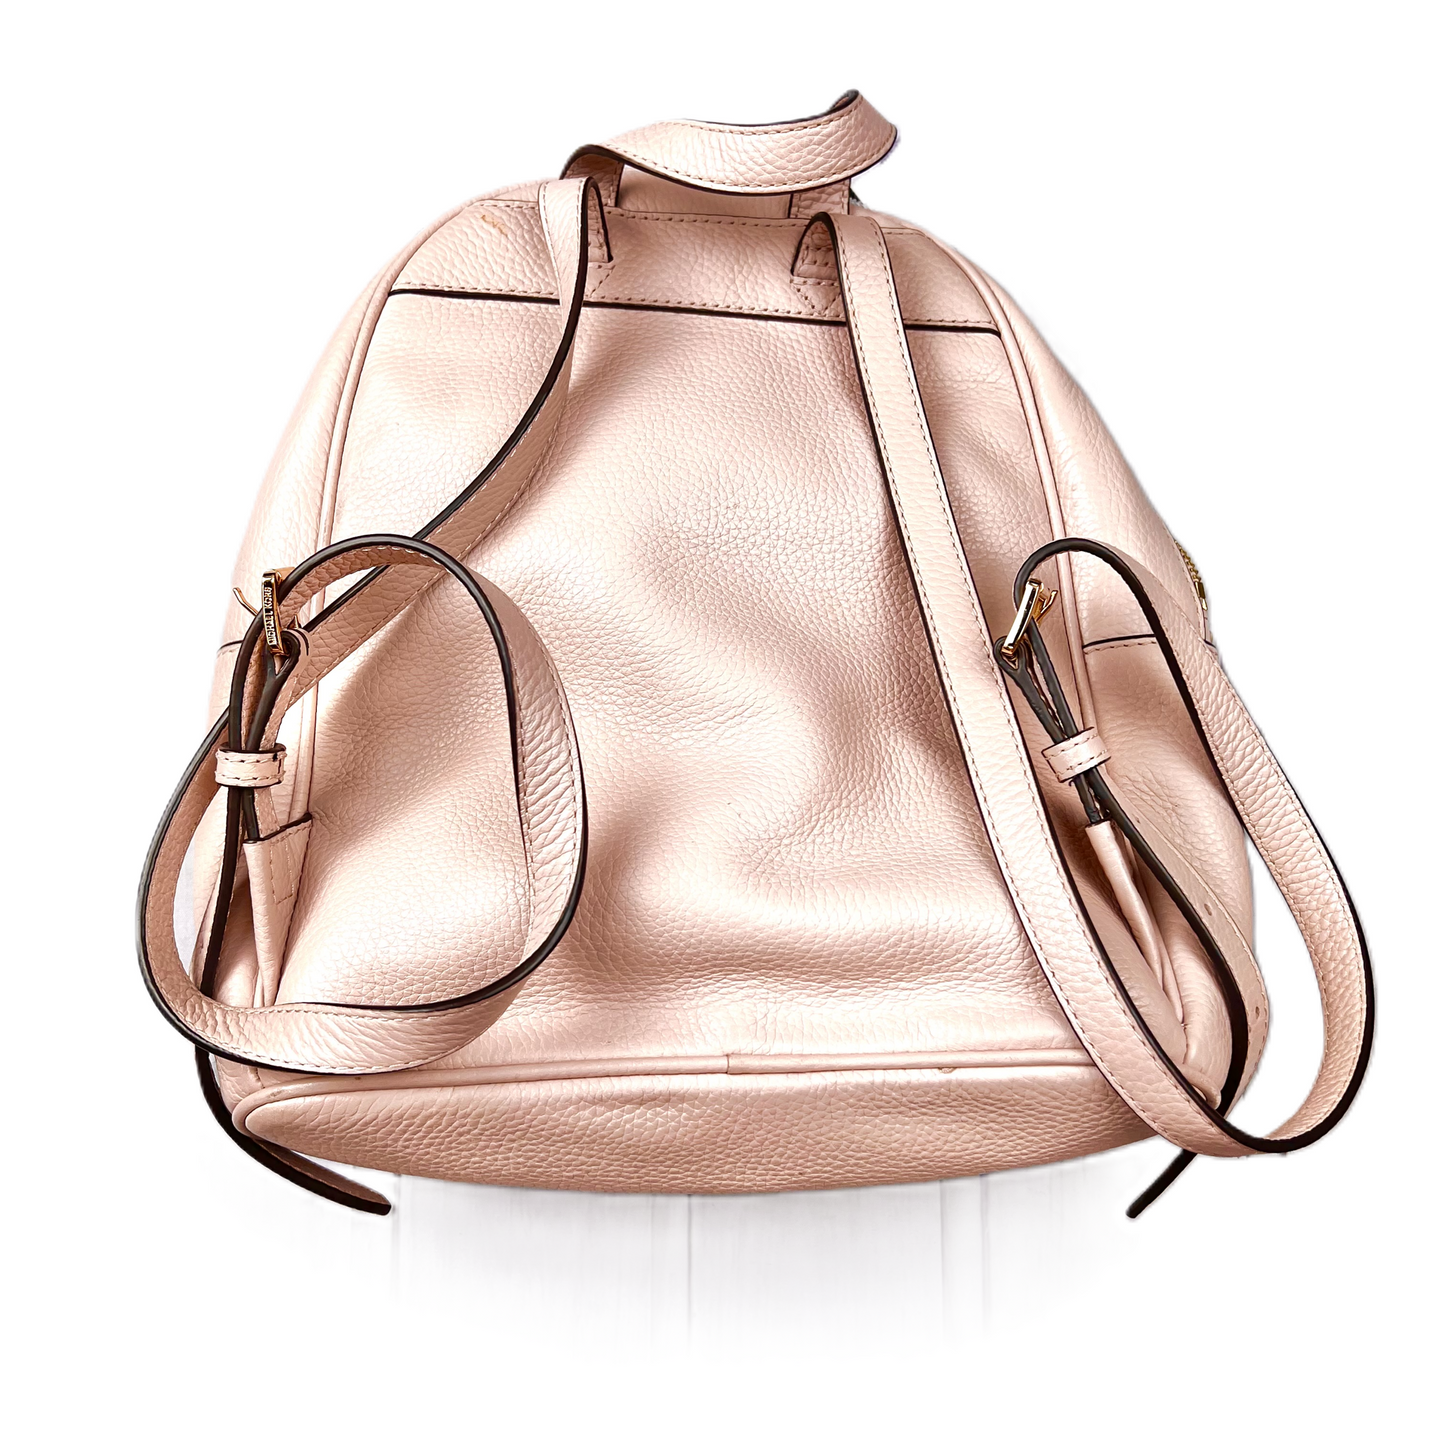 Backpack Designer By Michael Kors, Size: Medium